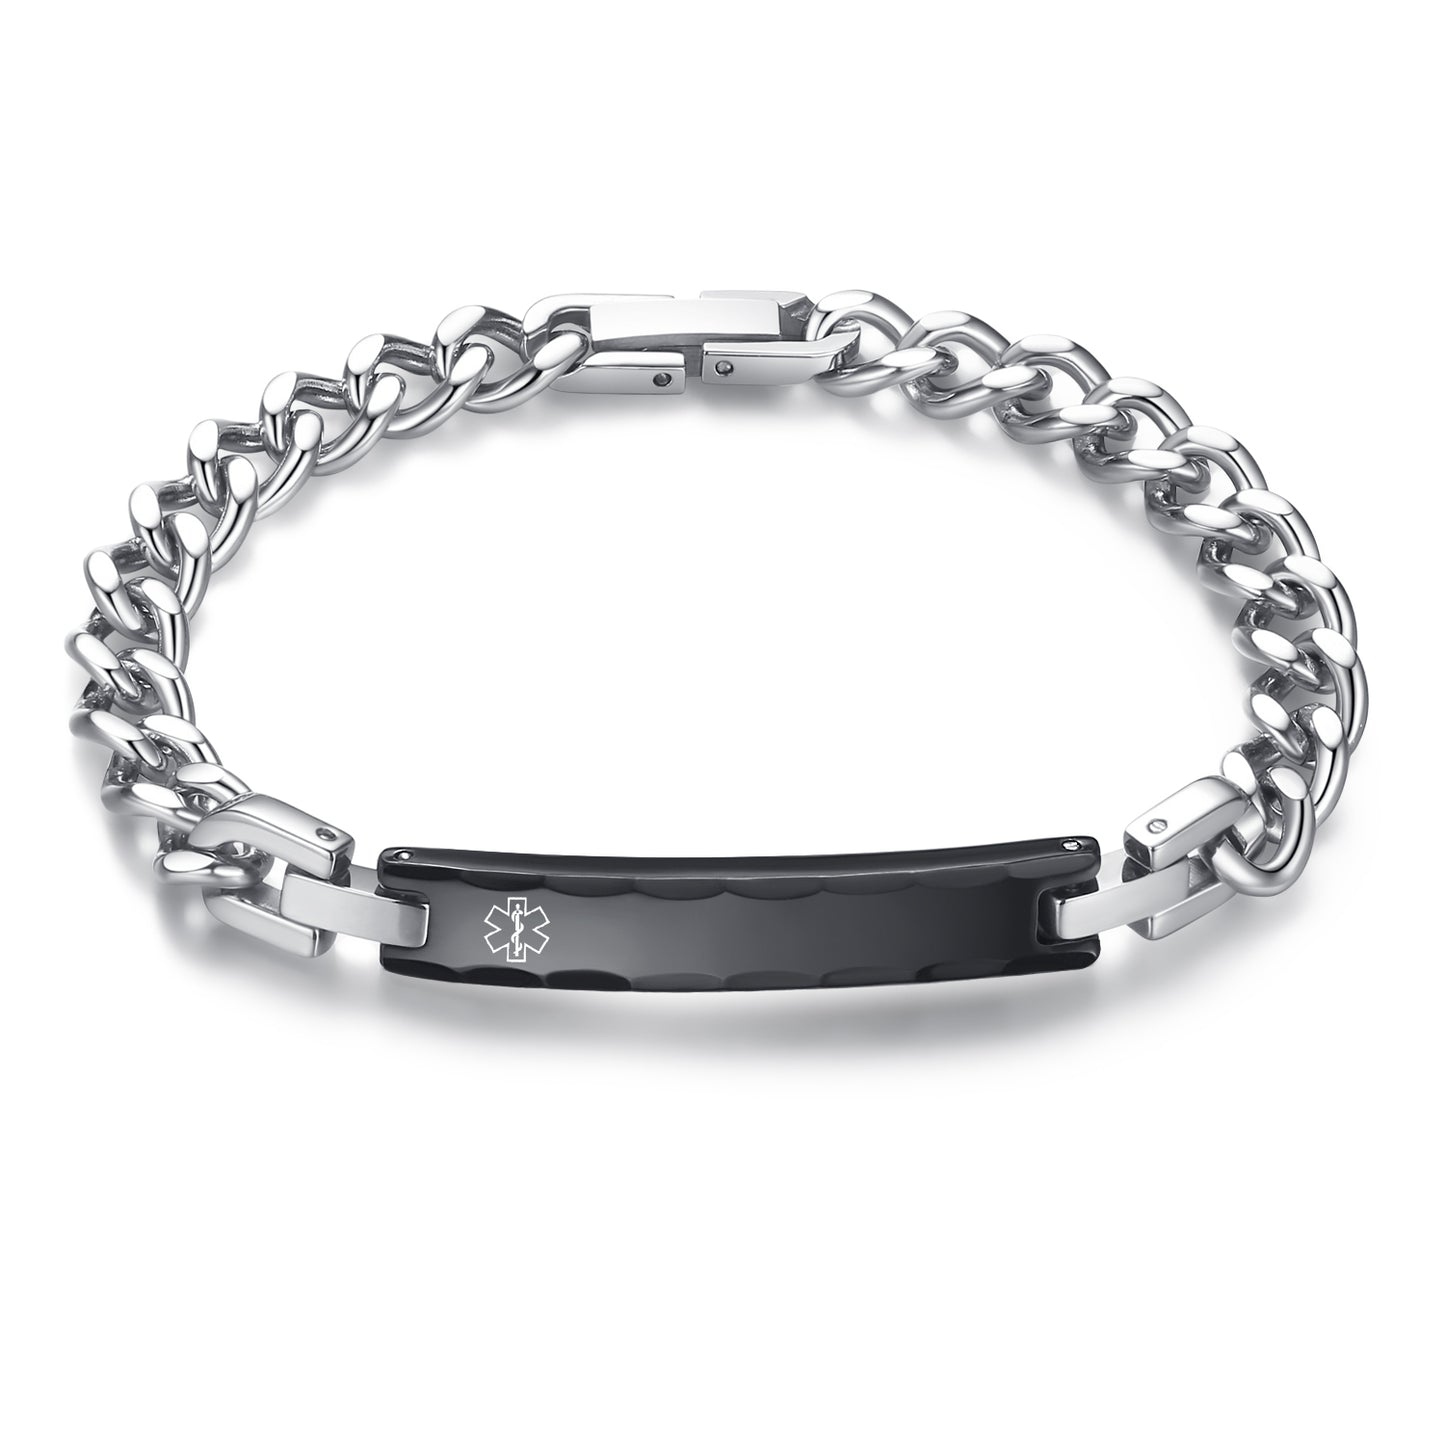 Personalized Custom Engraved Black Stainless Steel Medical Alert ID Bracelets for Women